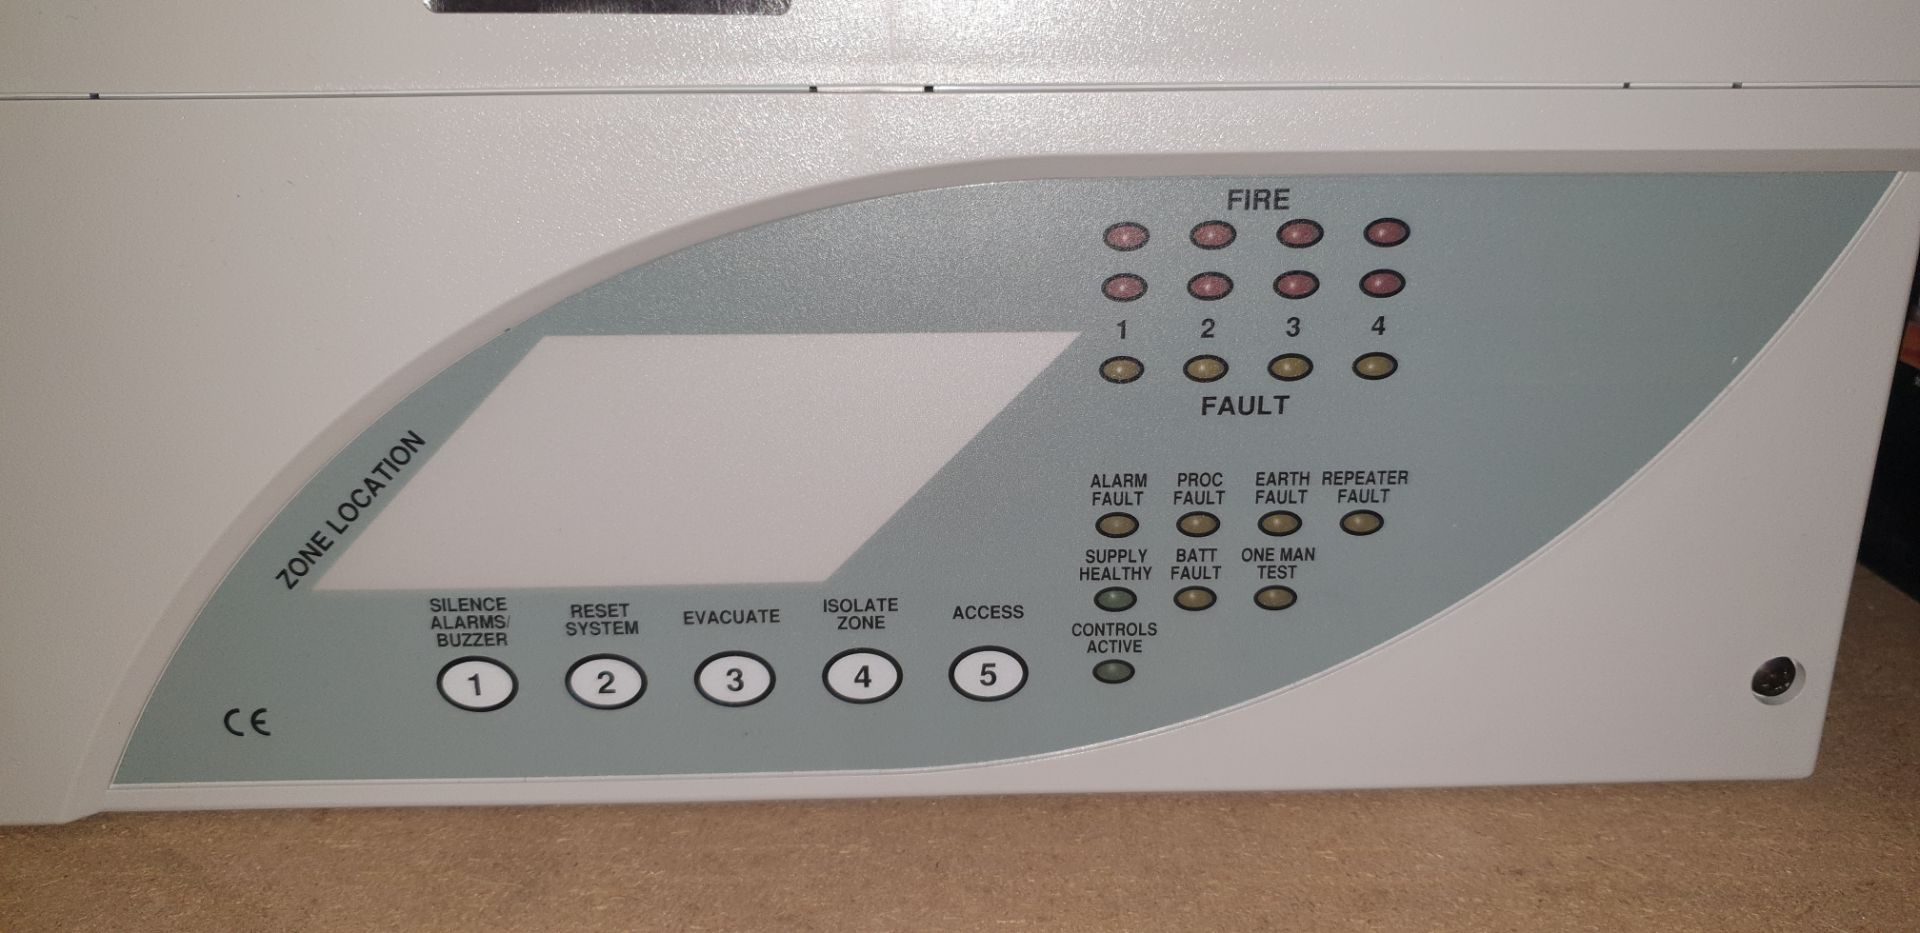 Fire alarm control panel model CB200 - Image 3 of 3